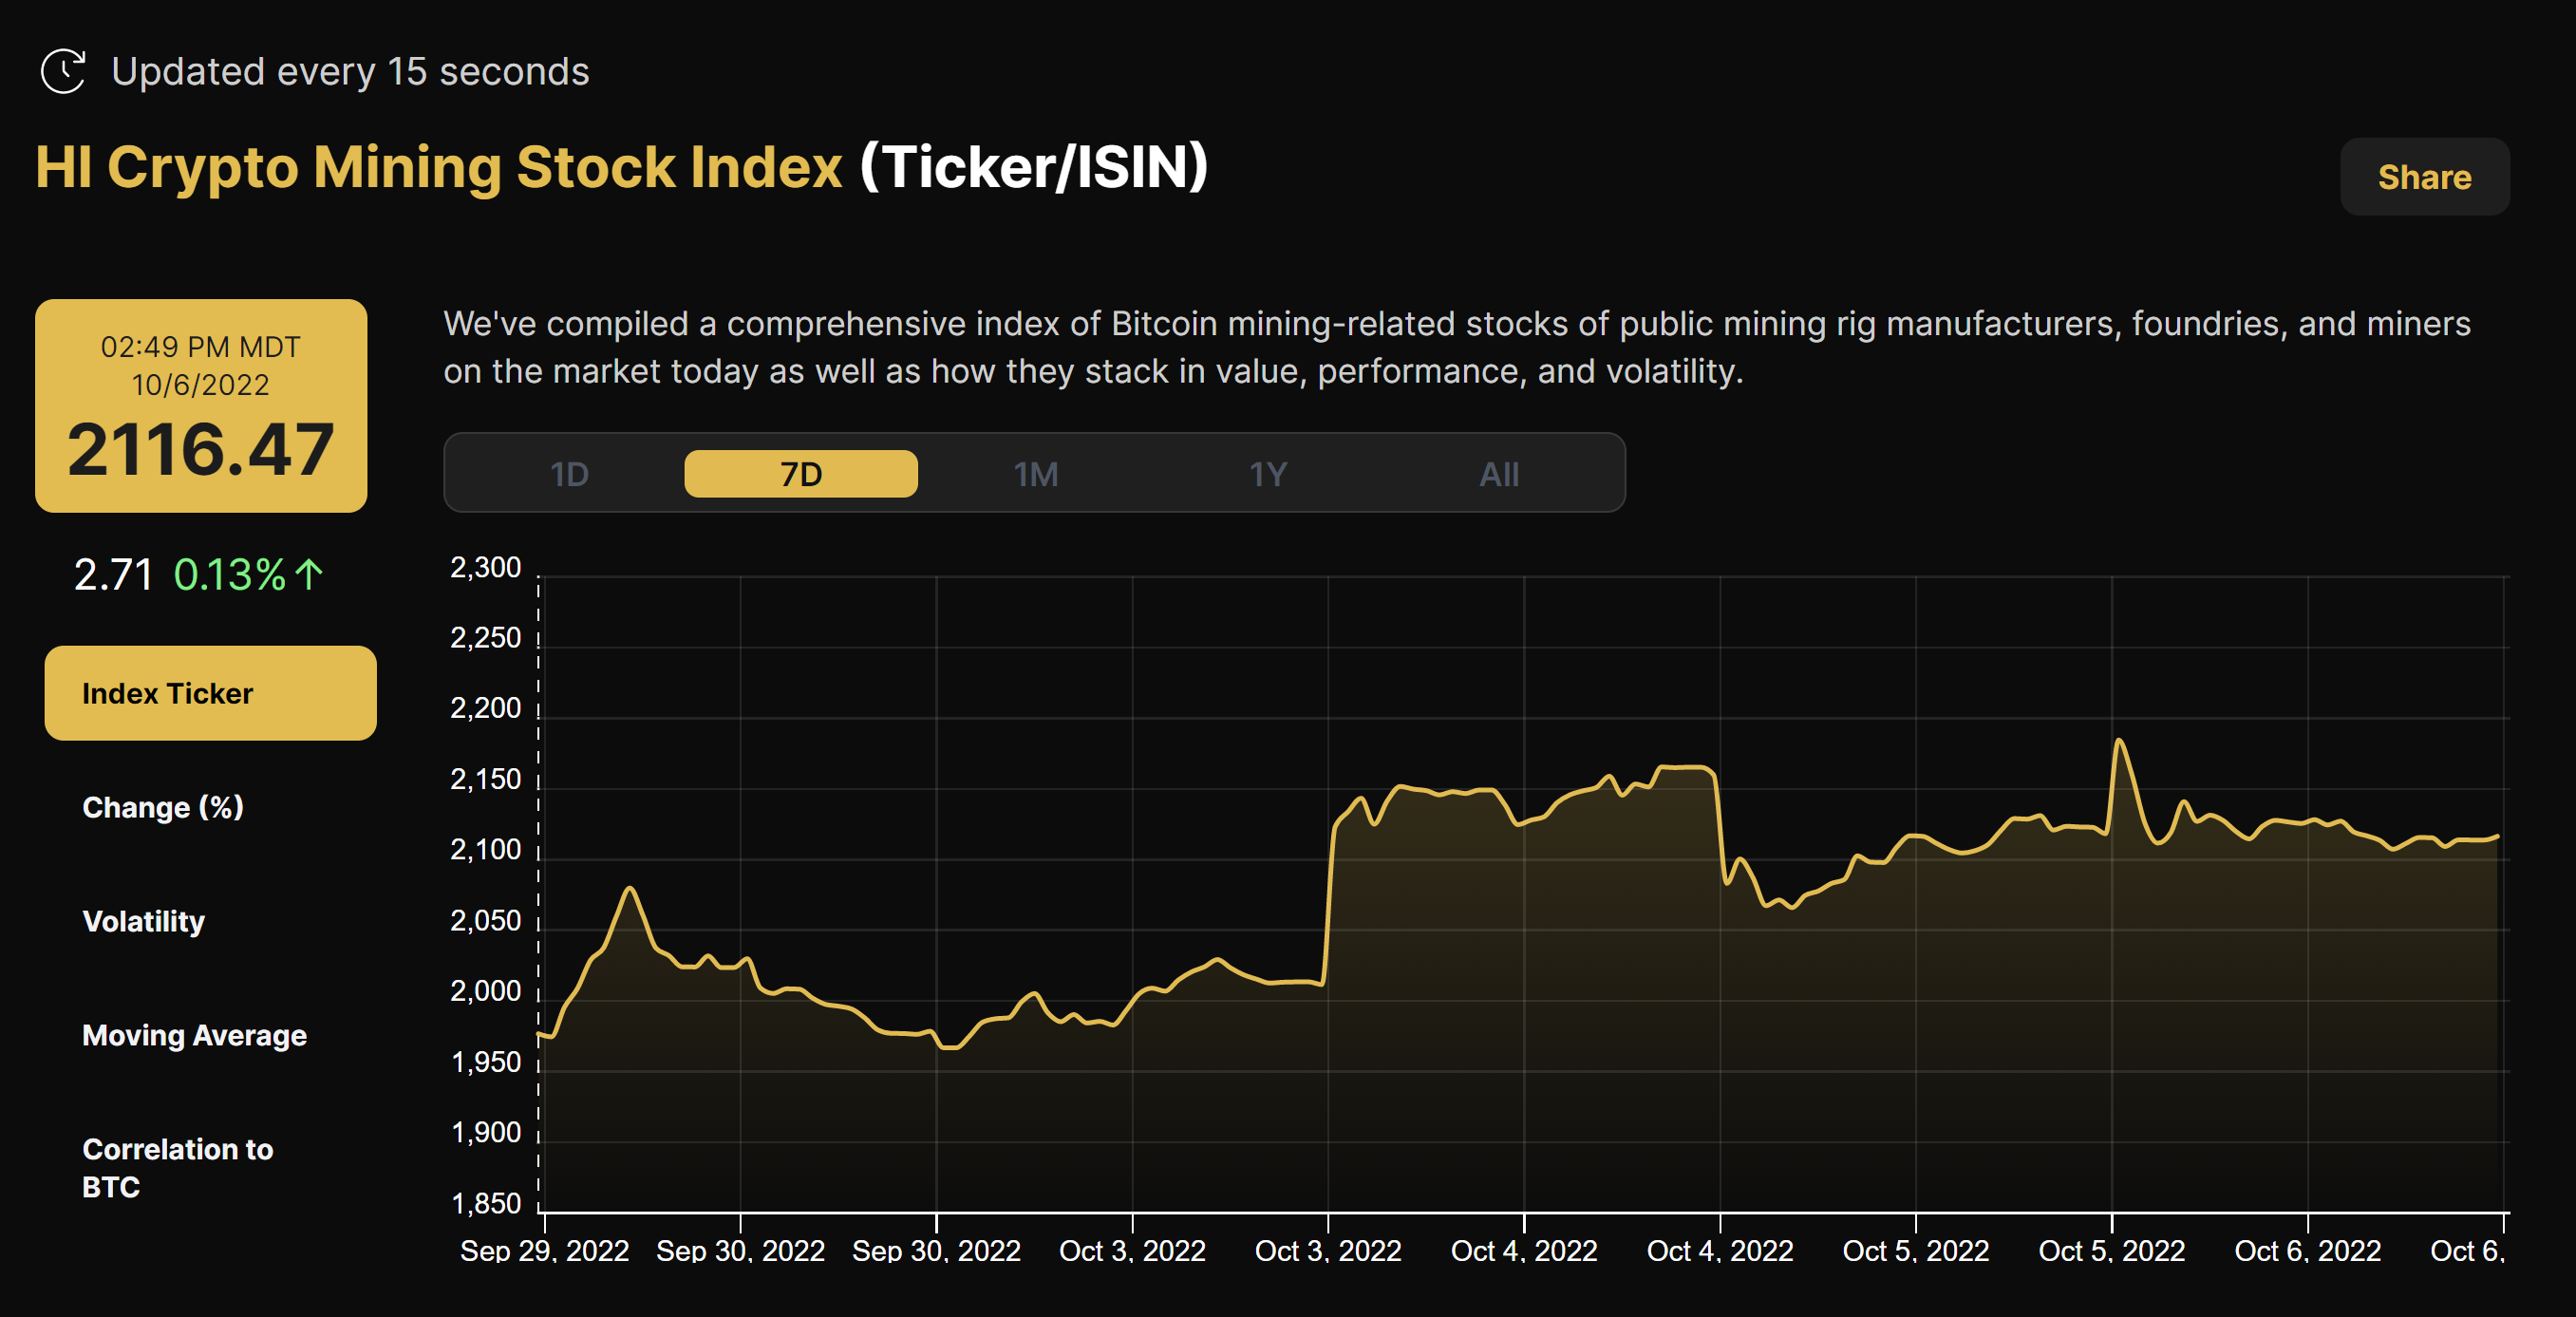 Crypto Mining Stock Index (September 29 - October 6, 2022)